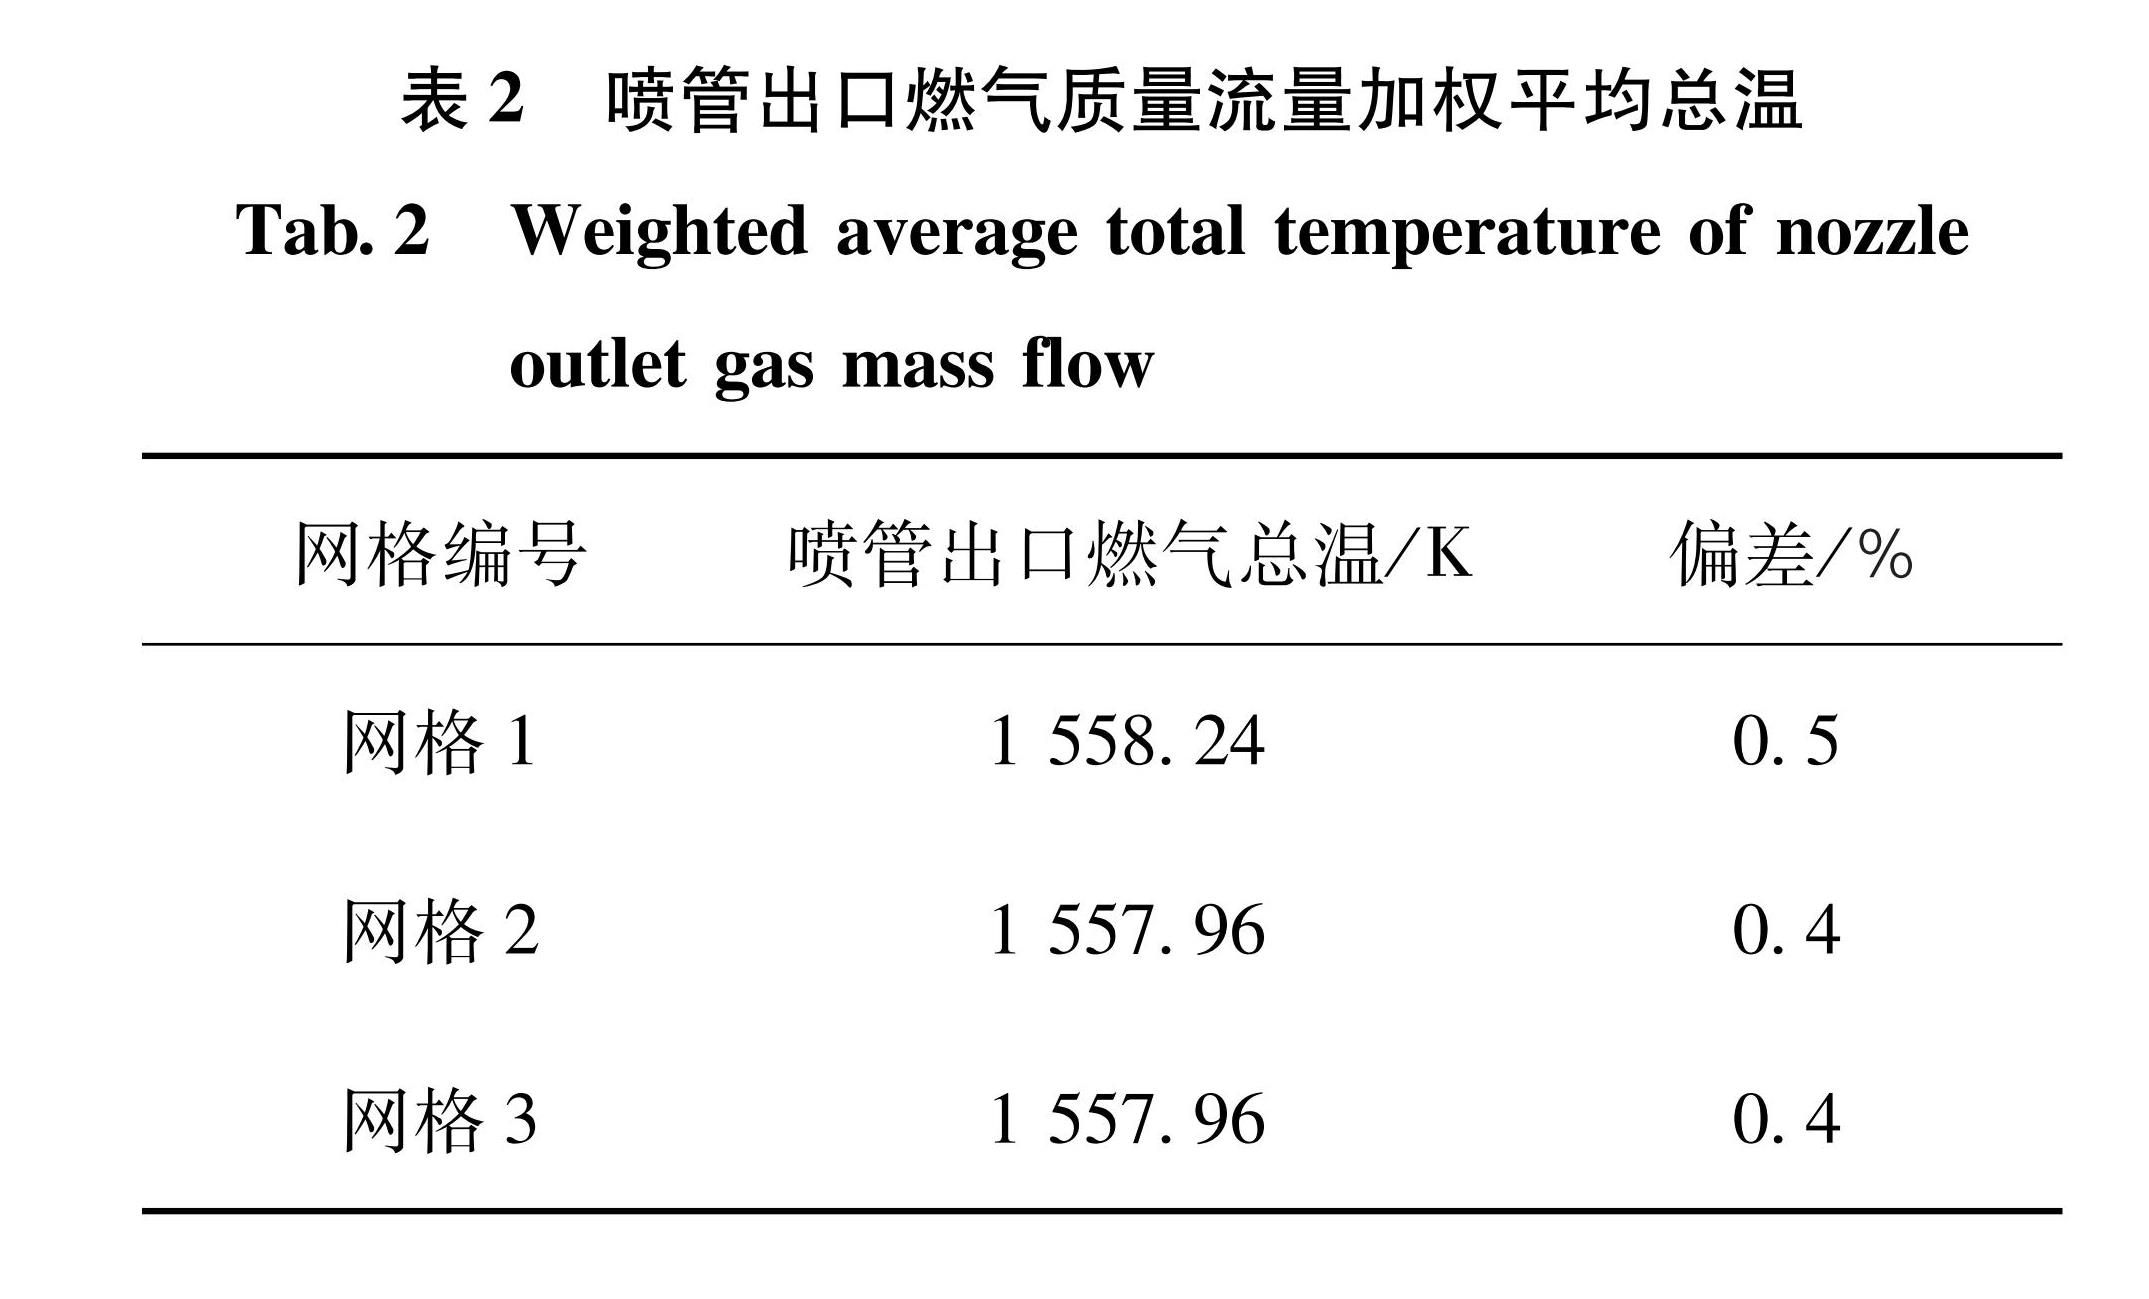 表2 喷管出口燃气质量流量加权平均总温<br/>Tab.2 Weighted average total temperature of nozzle outlet gas mass flow